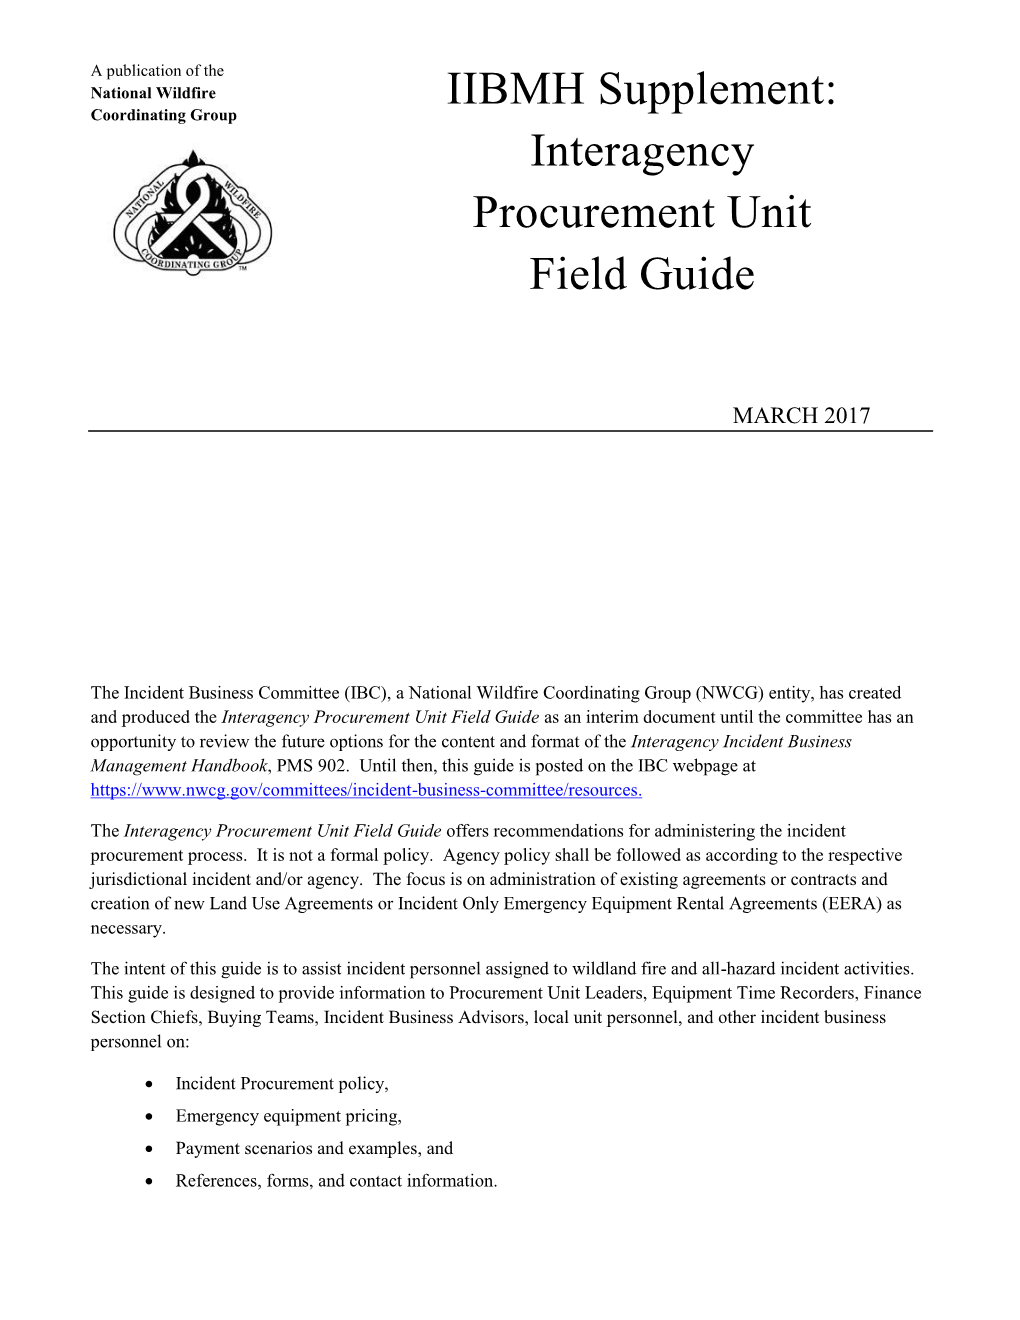 Interagency Procurement Unit Field Guide